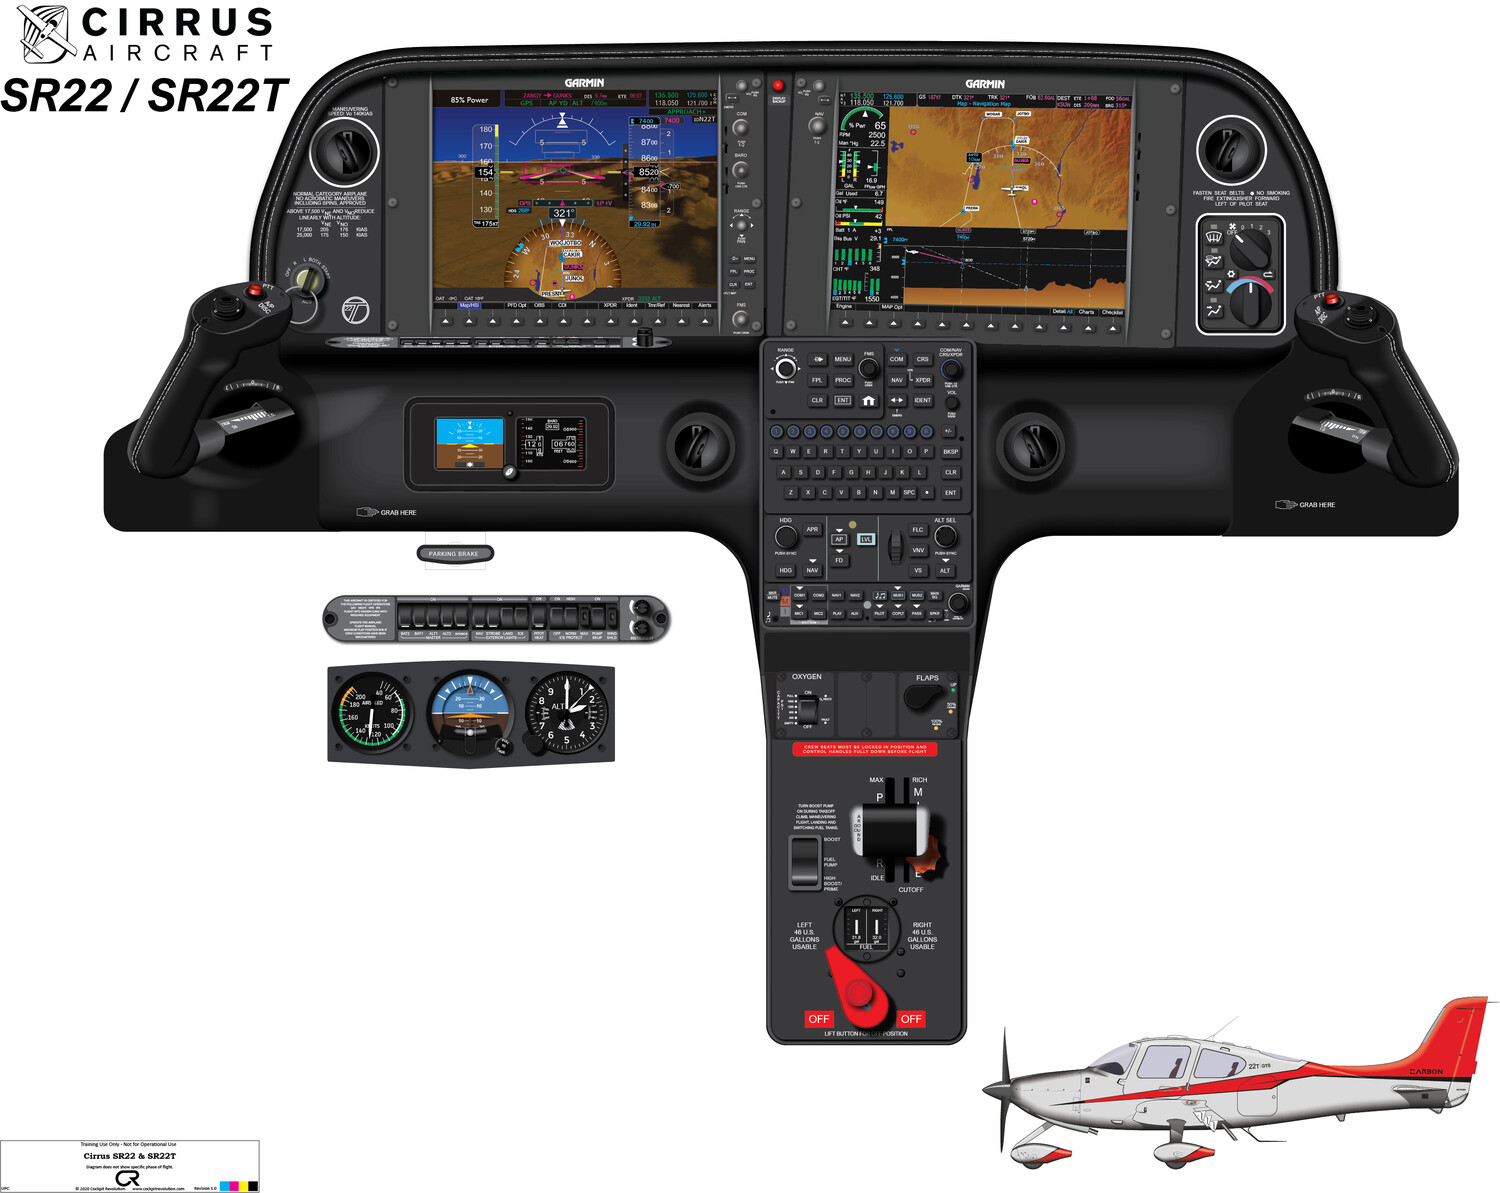 Cirrus SR22 Cockpit Poster - Digital Download